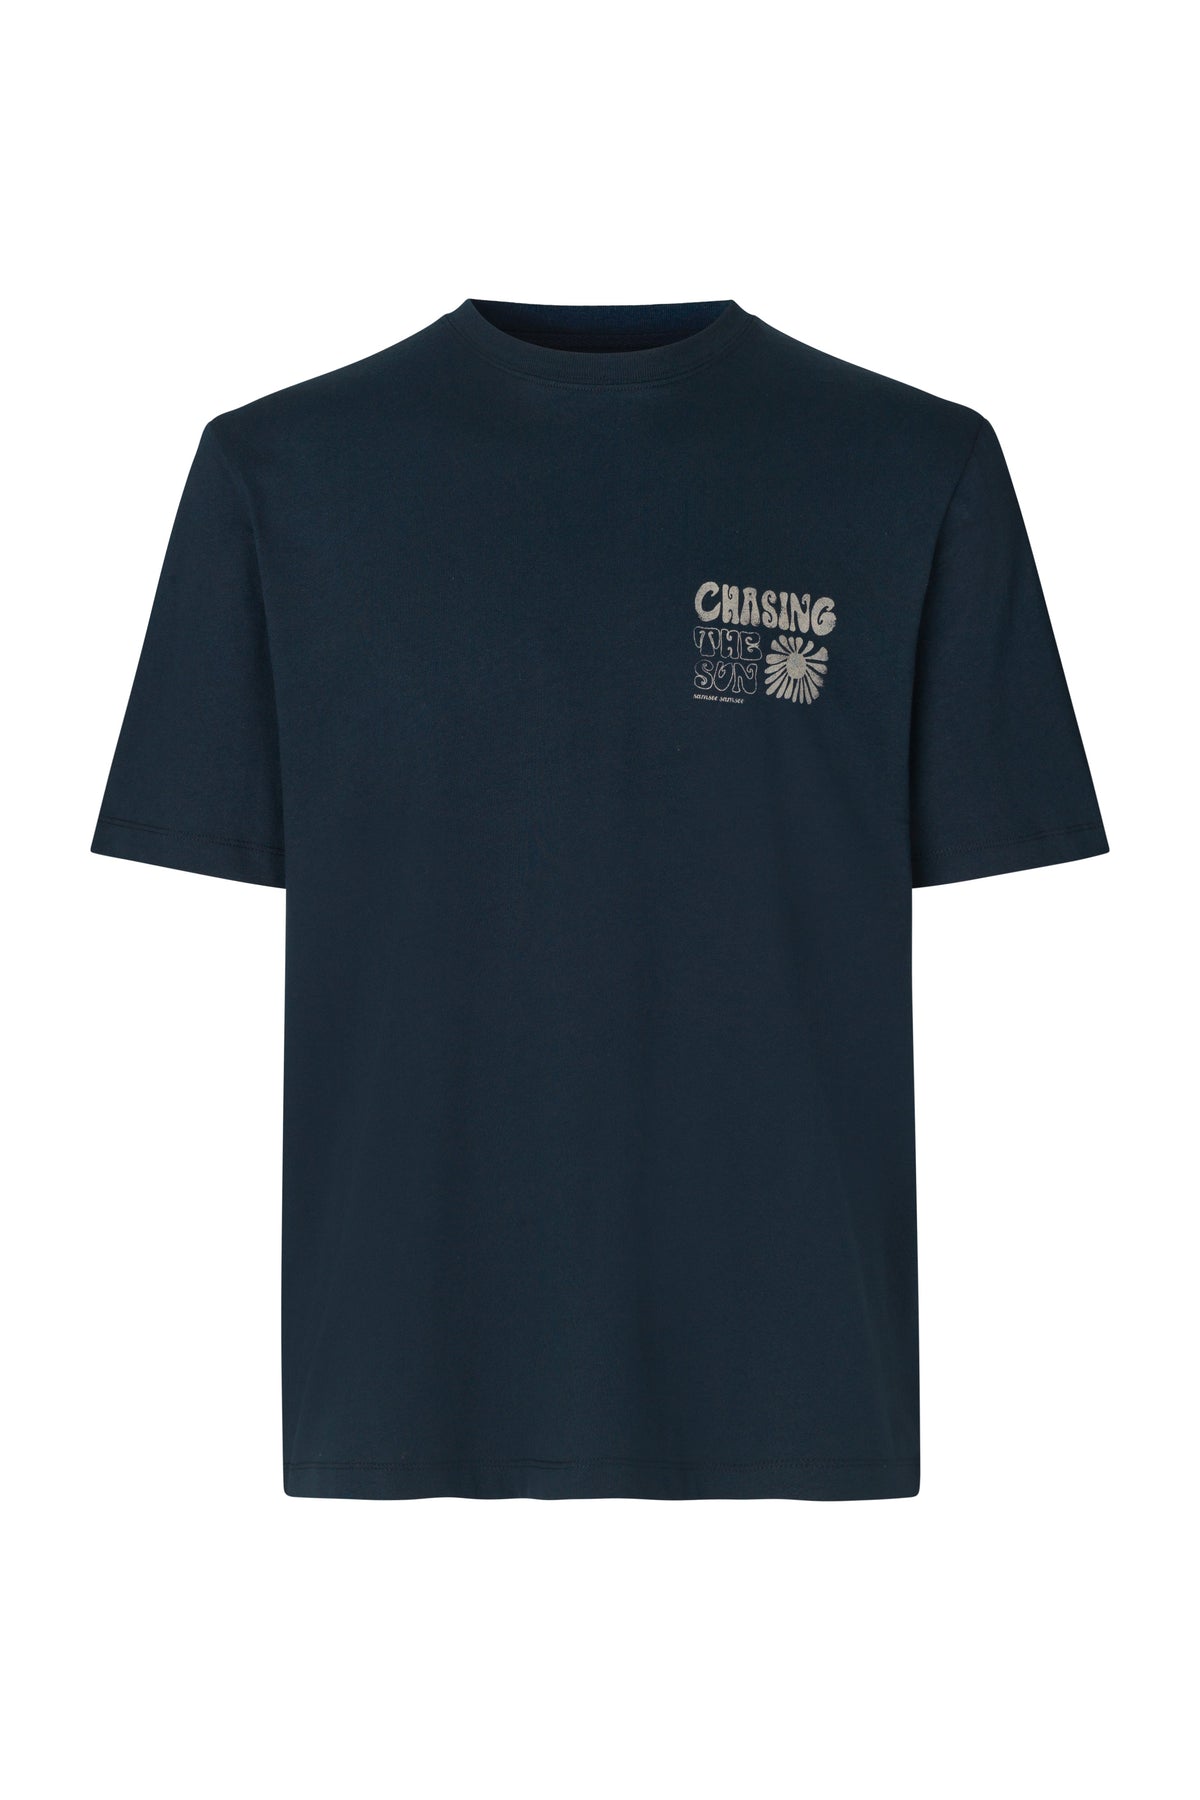 Chasing T-shirt 11415 - Salute